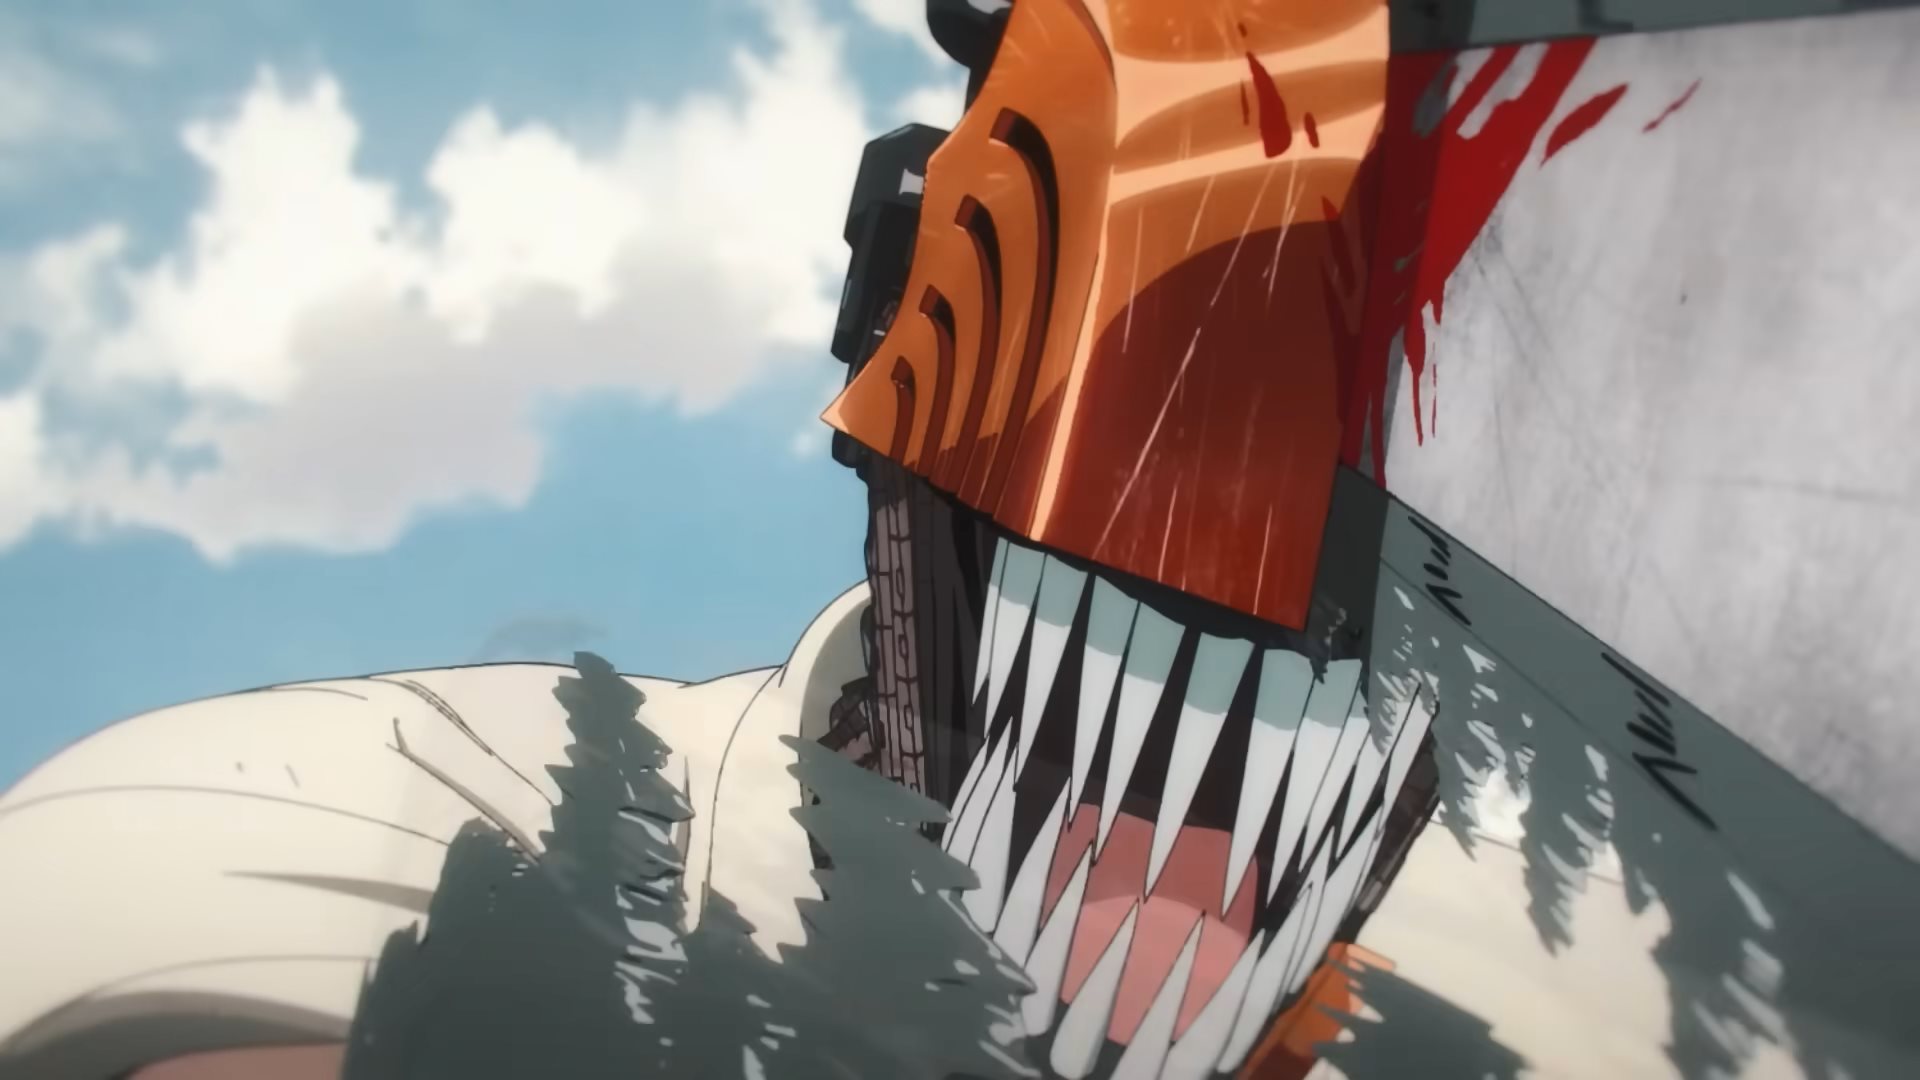 Anime Trending - Chainsaw Man - Episode 9 Ending theme